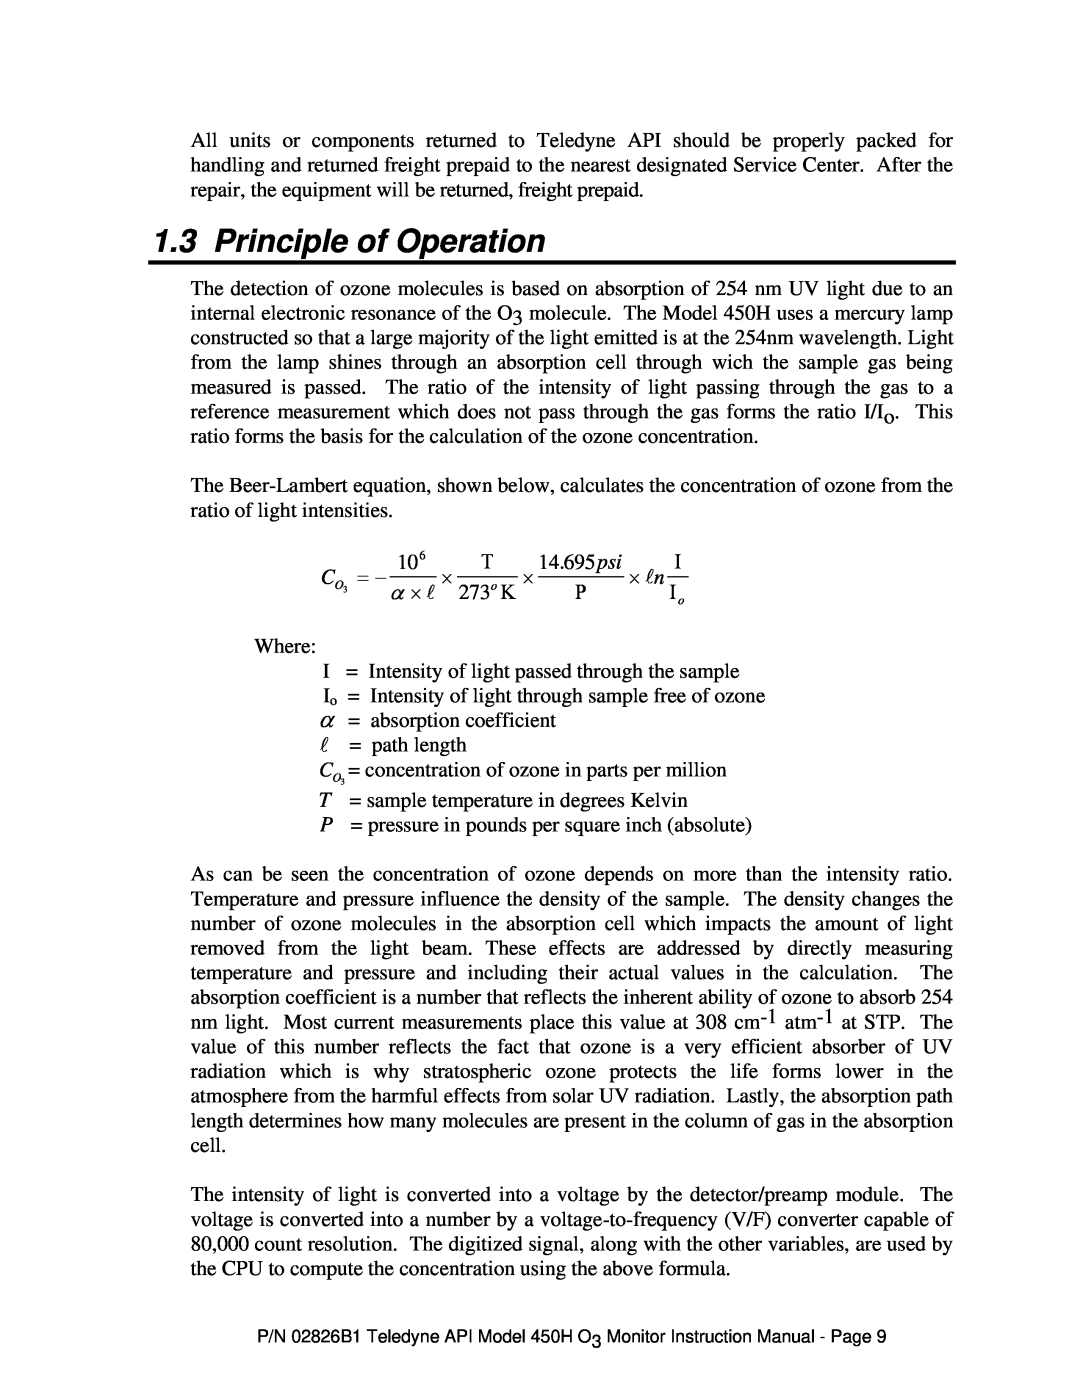 Teledyne 450H instruction manual Principle of Operation 